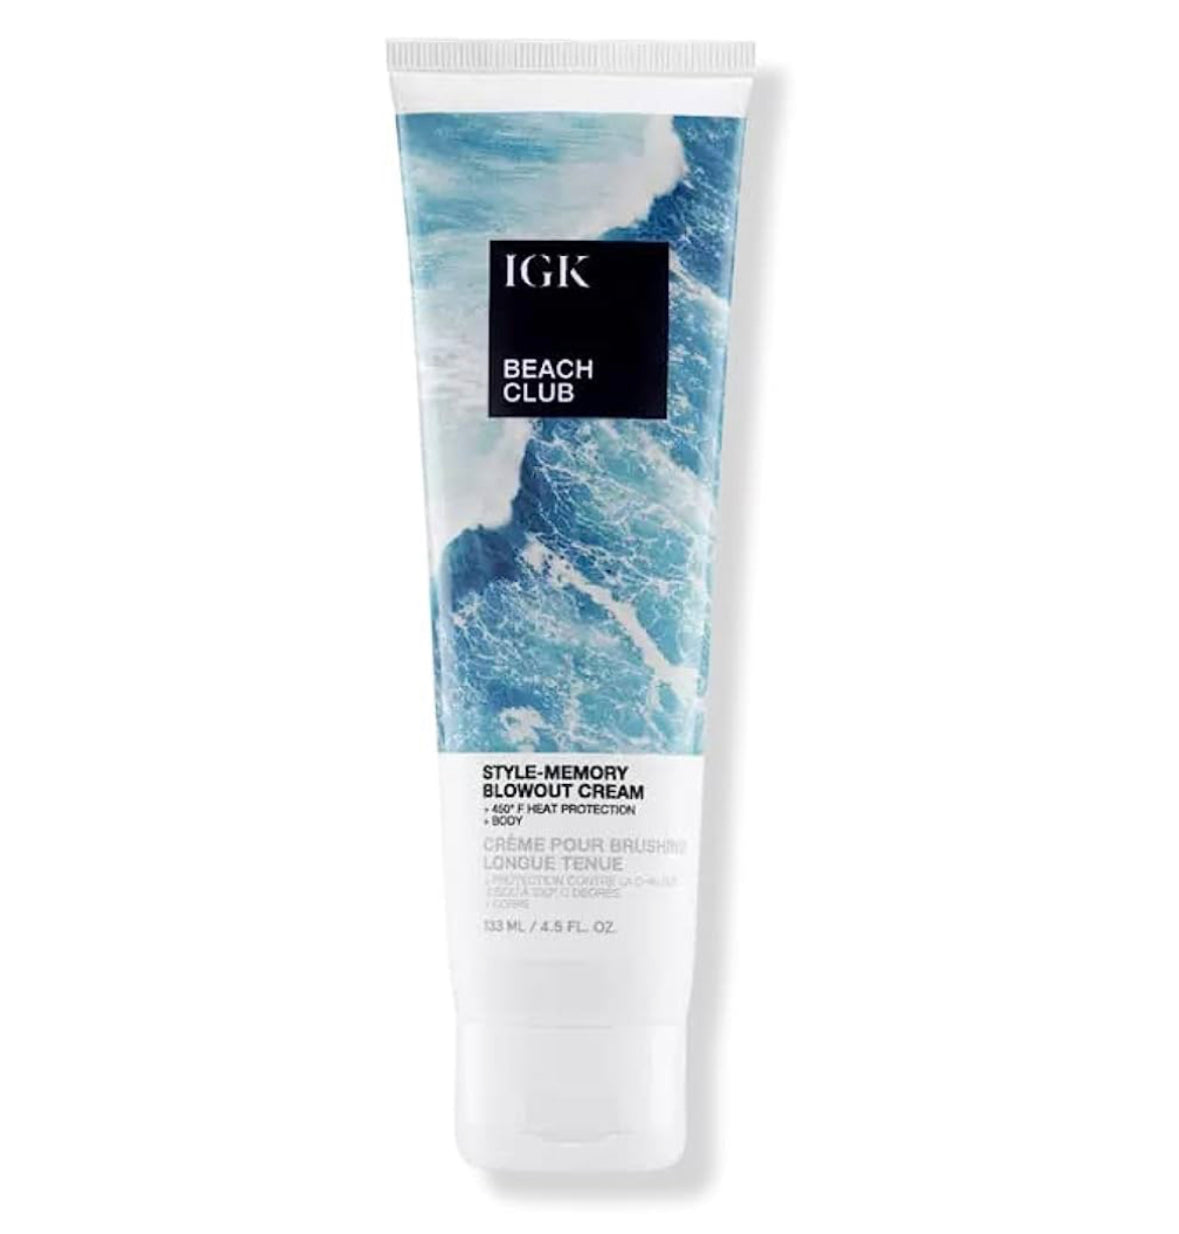 IGK Beach Club Style-Memory Blowout Cream